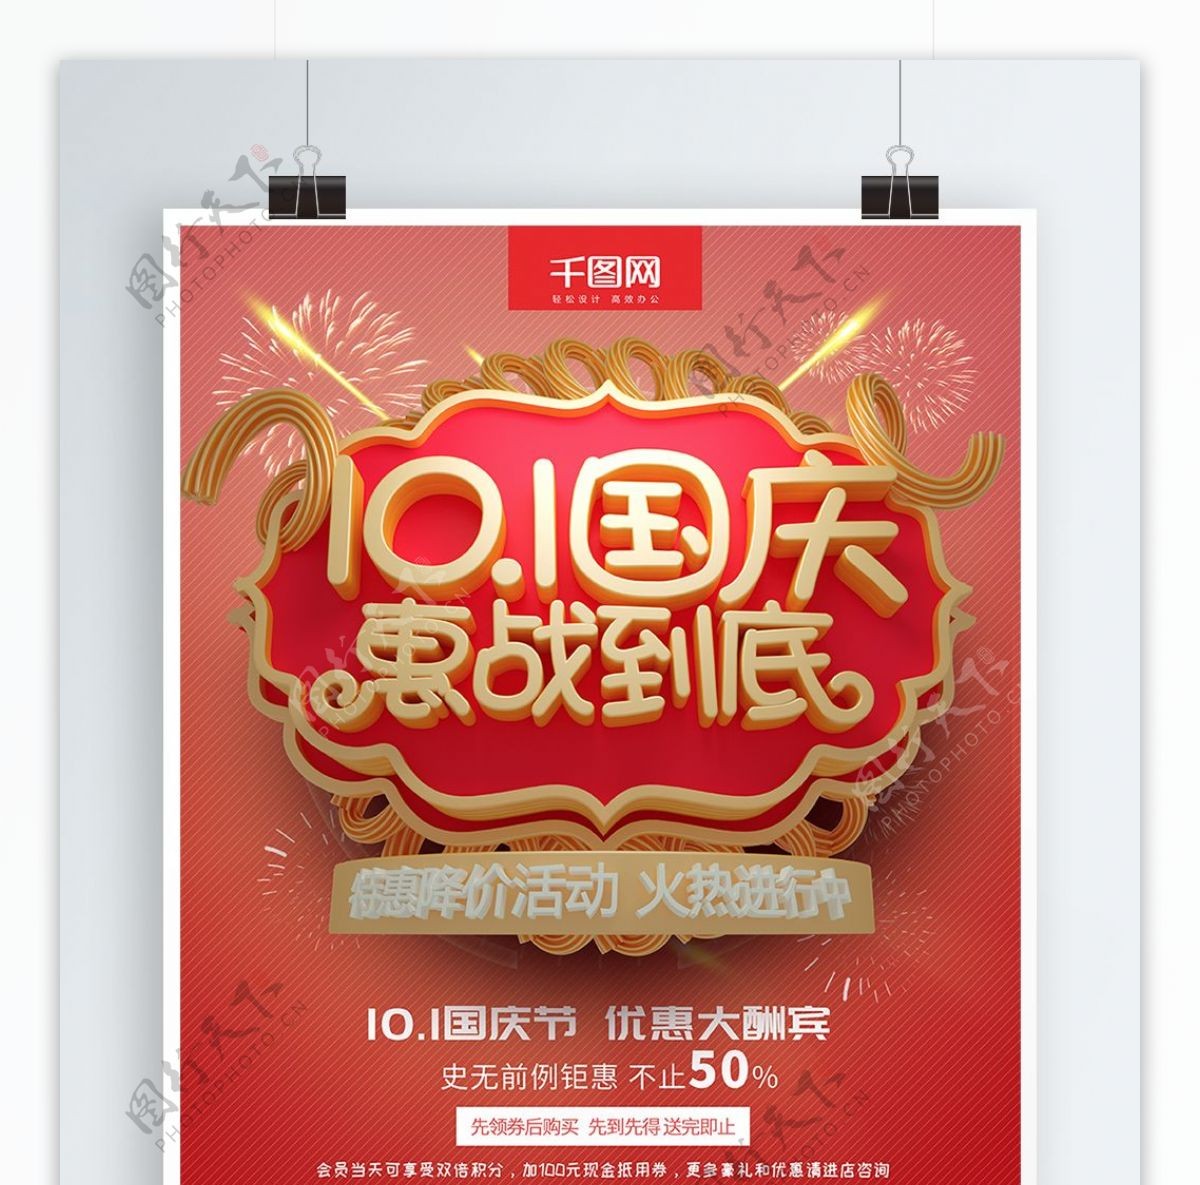 C4D红色10.1国庆惠战到底促销海报